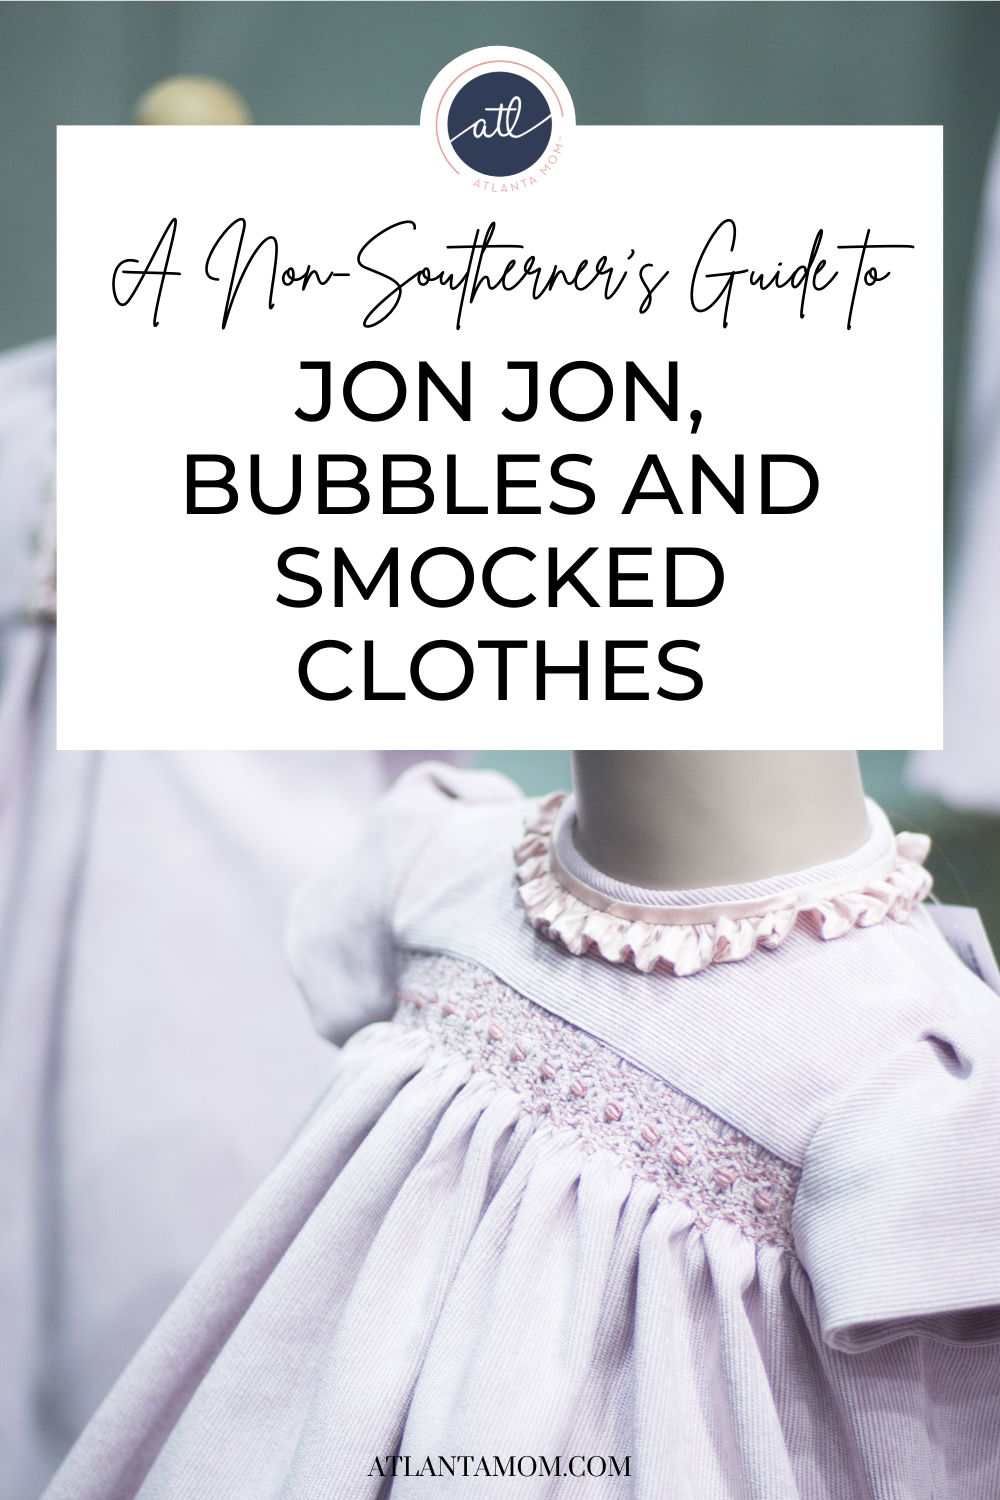 Jon Jon, Bubbles, and Smocked Clothes